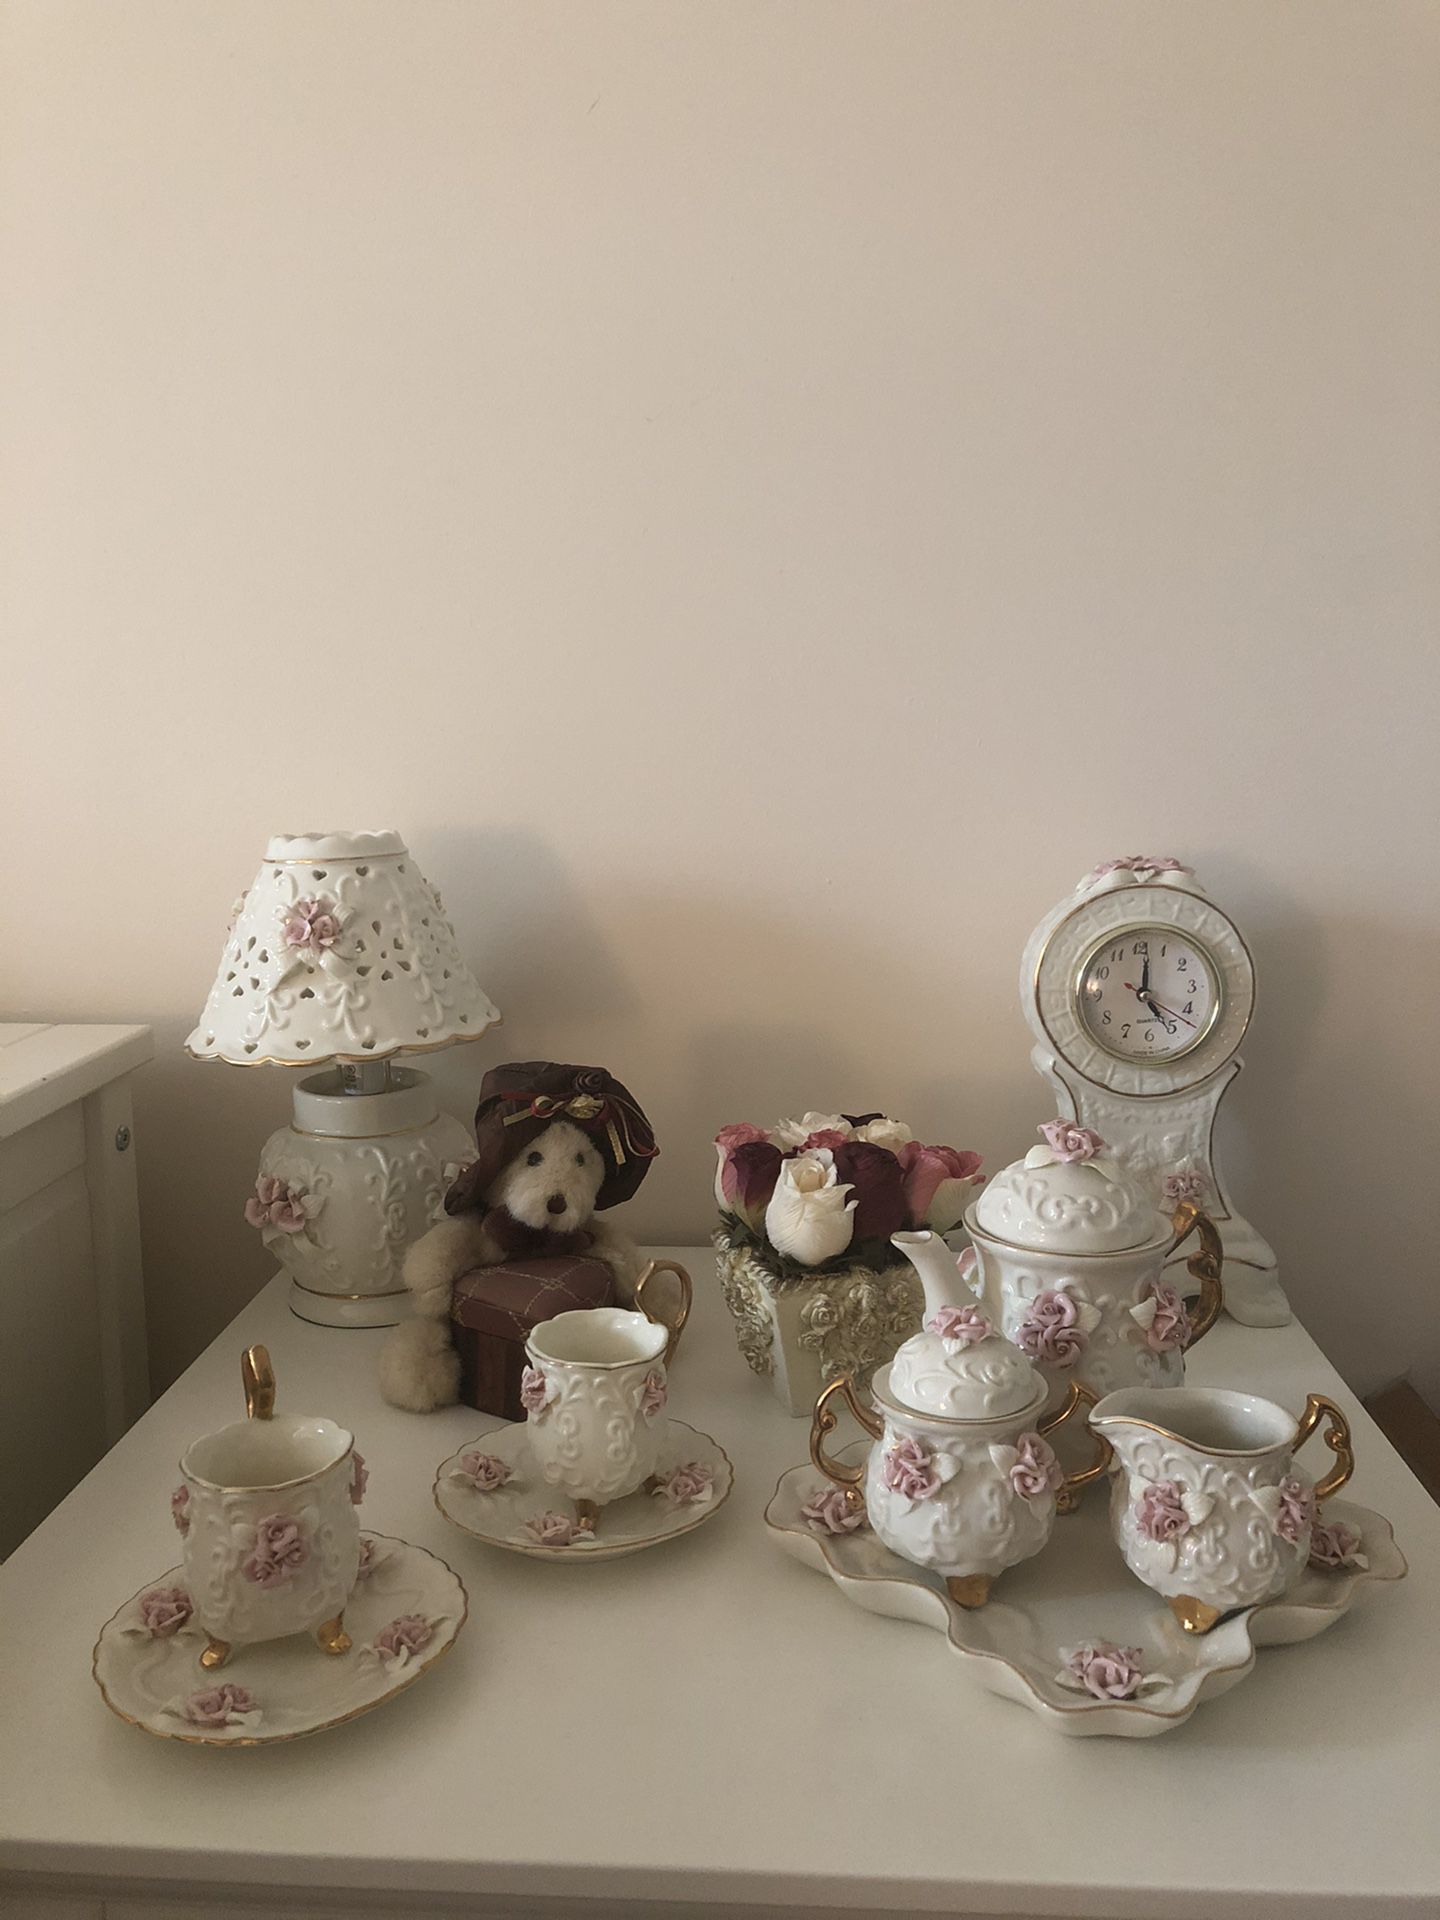 rose themed tea set